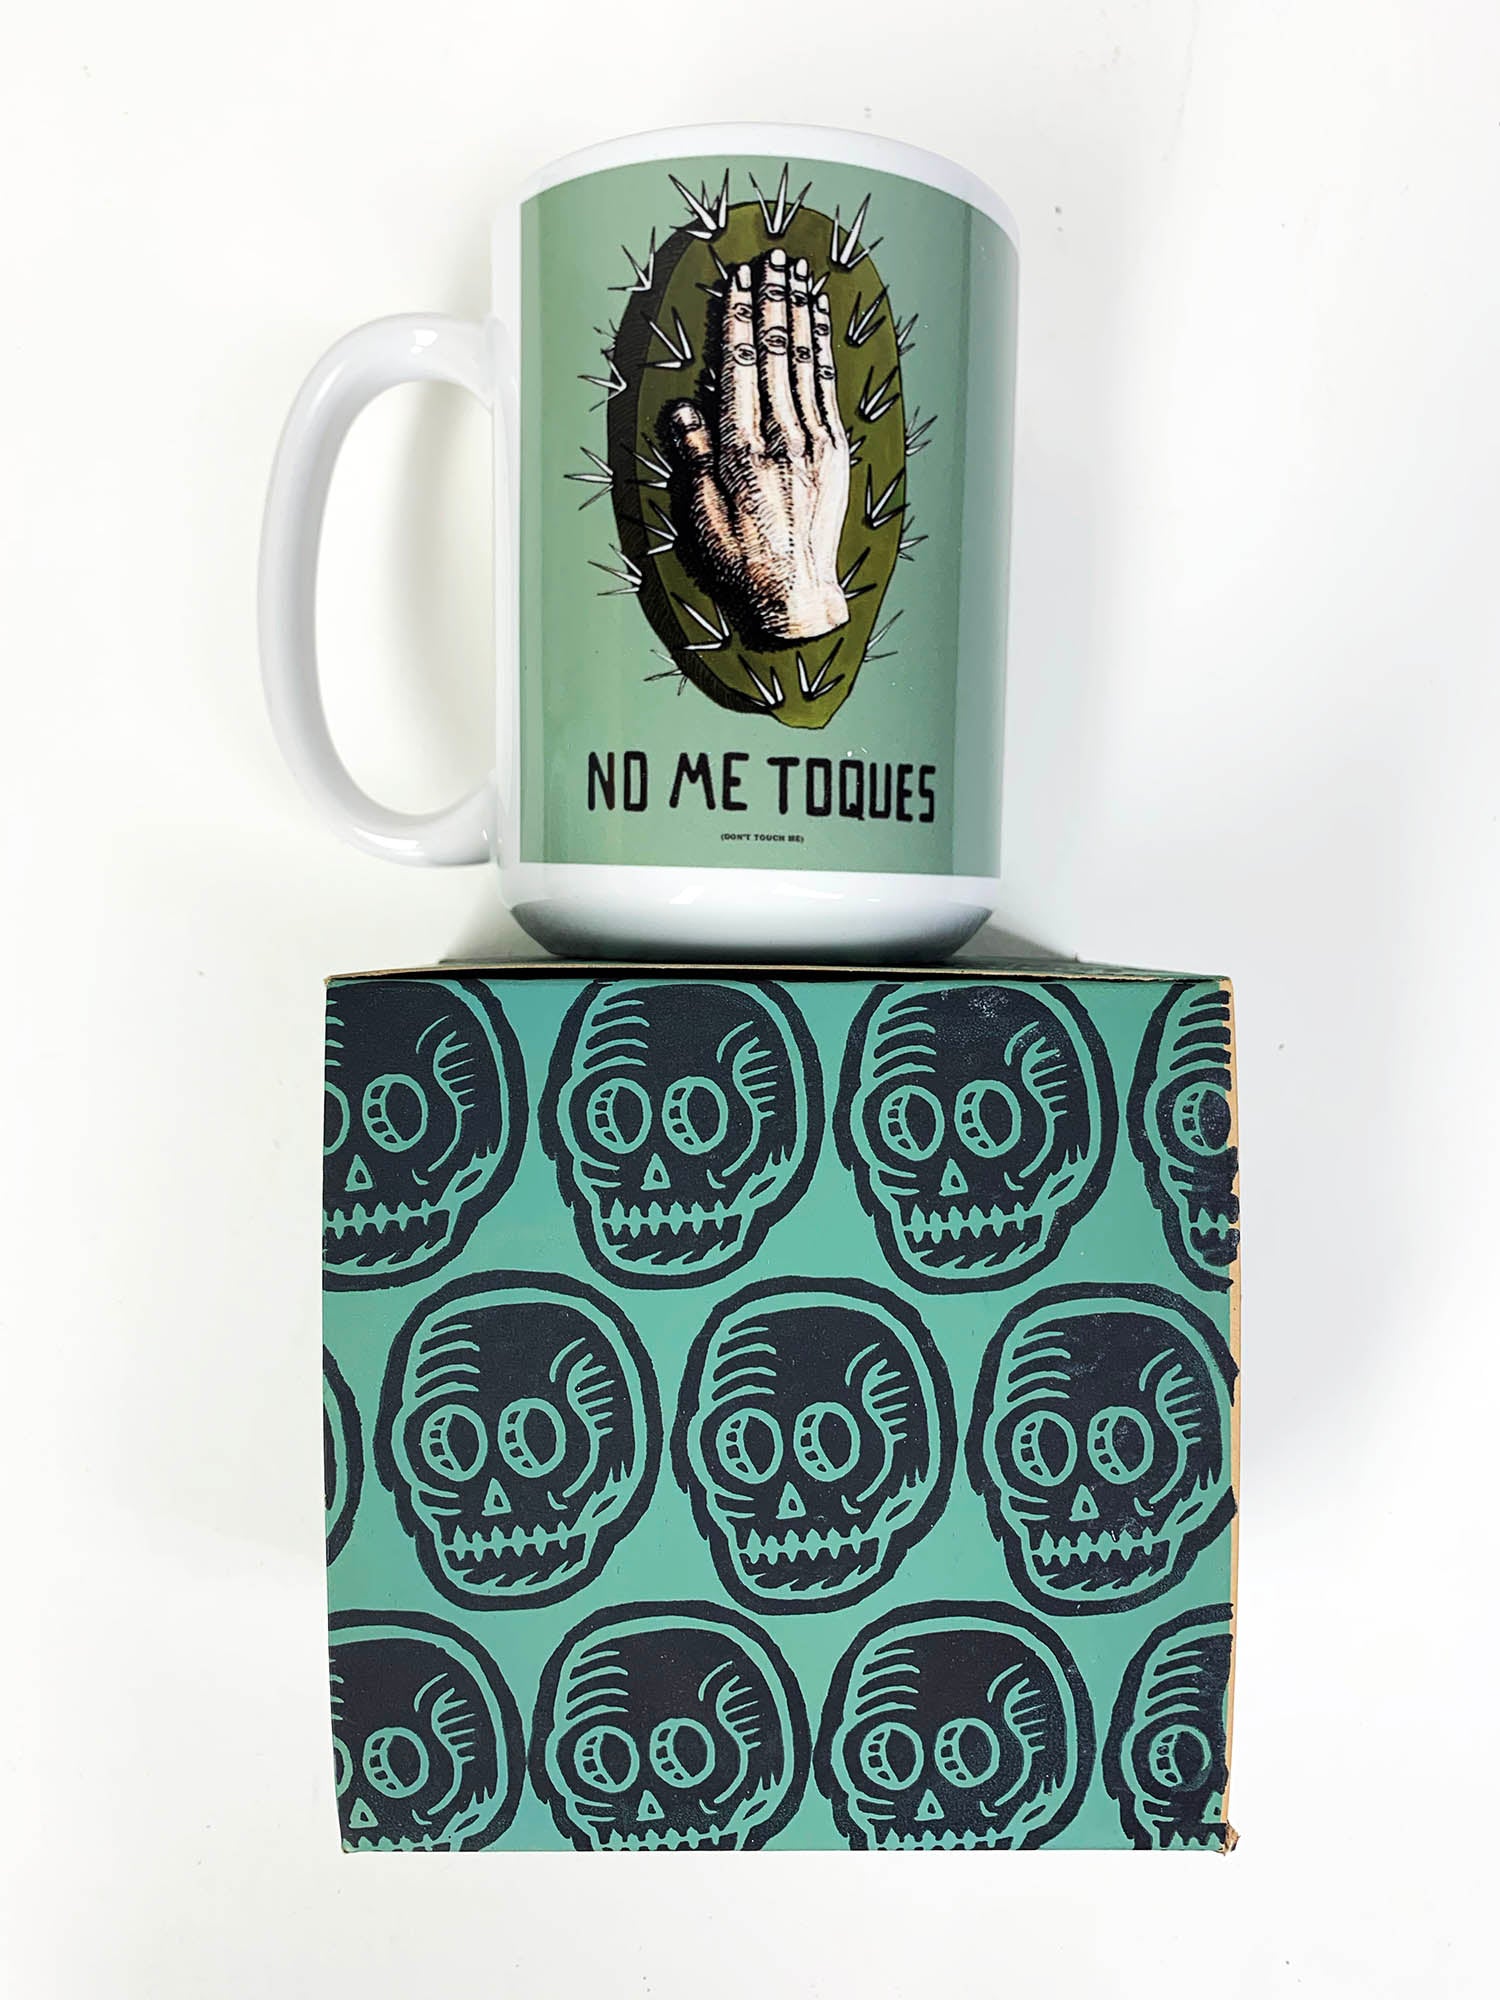 No Me Toques coffee mug and hand printed box